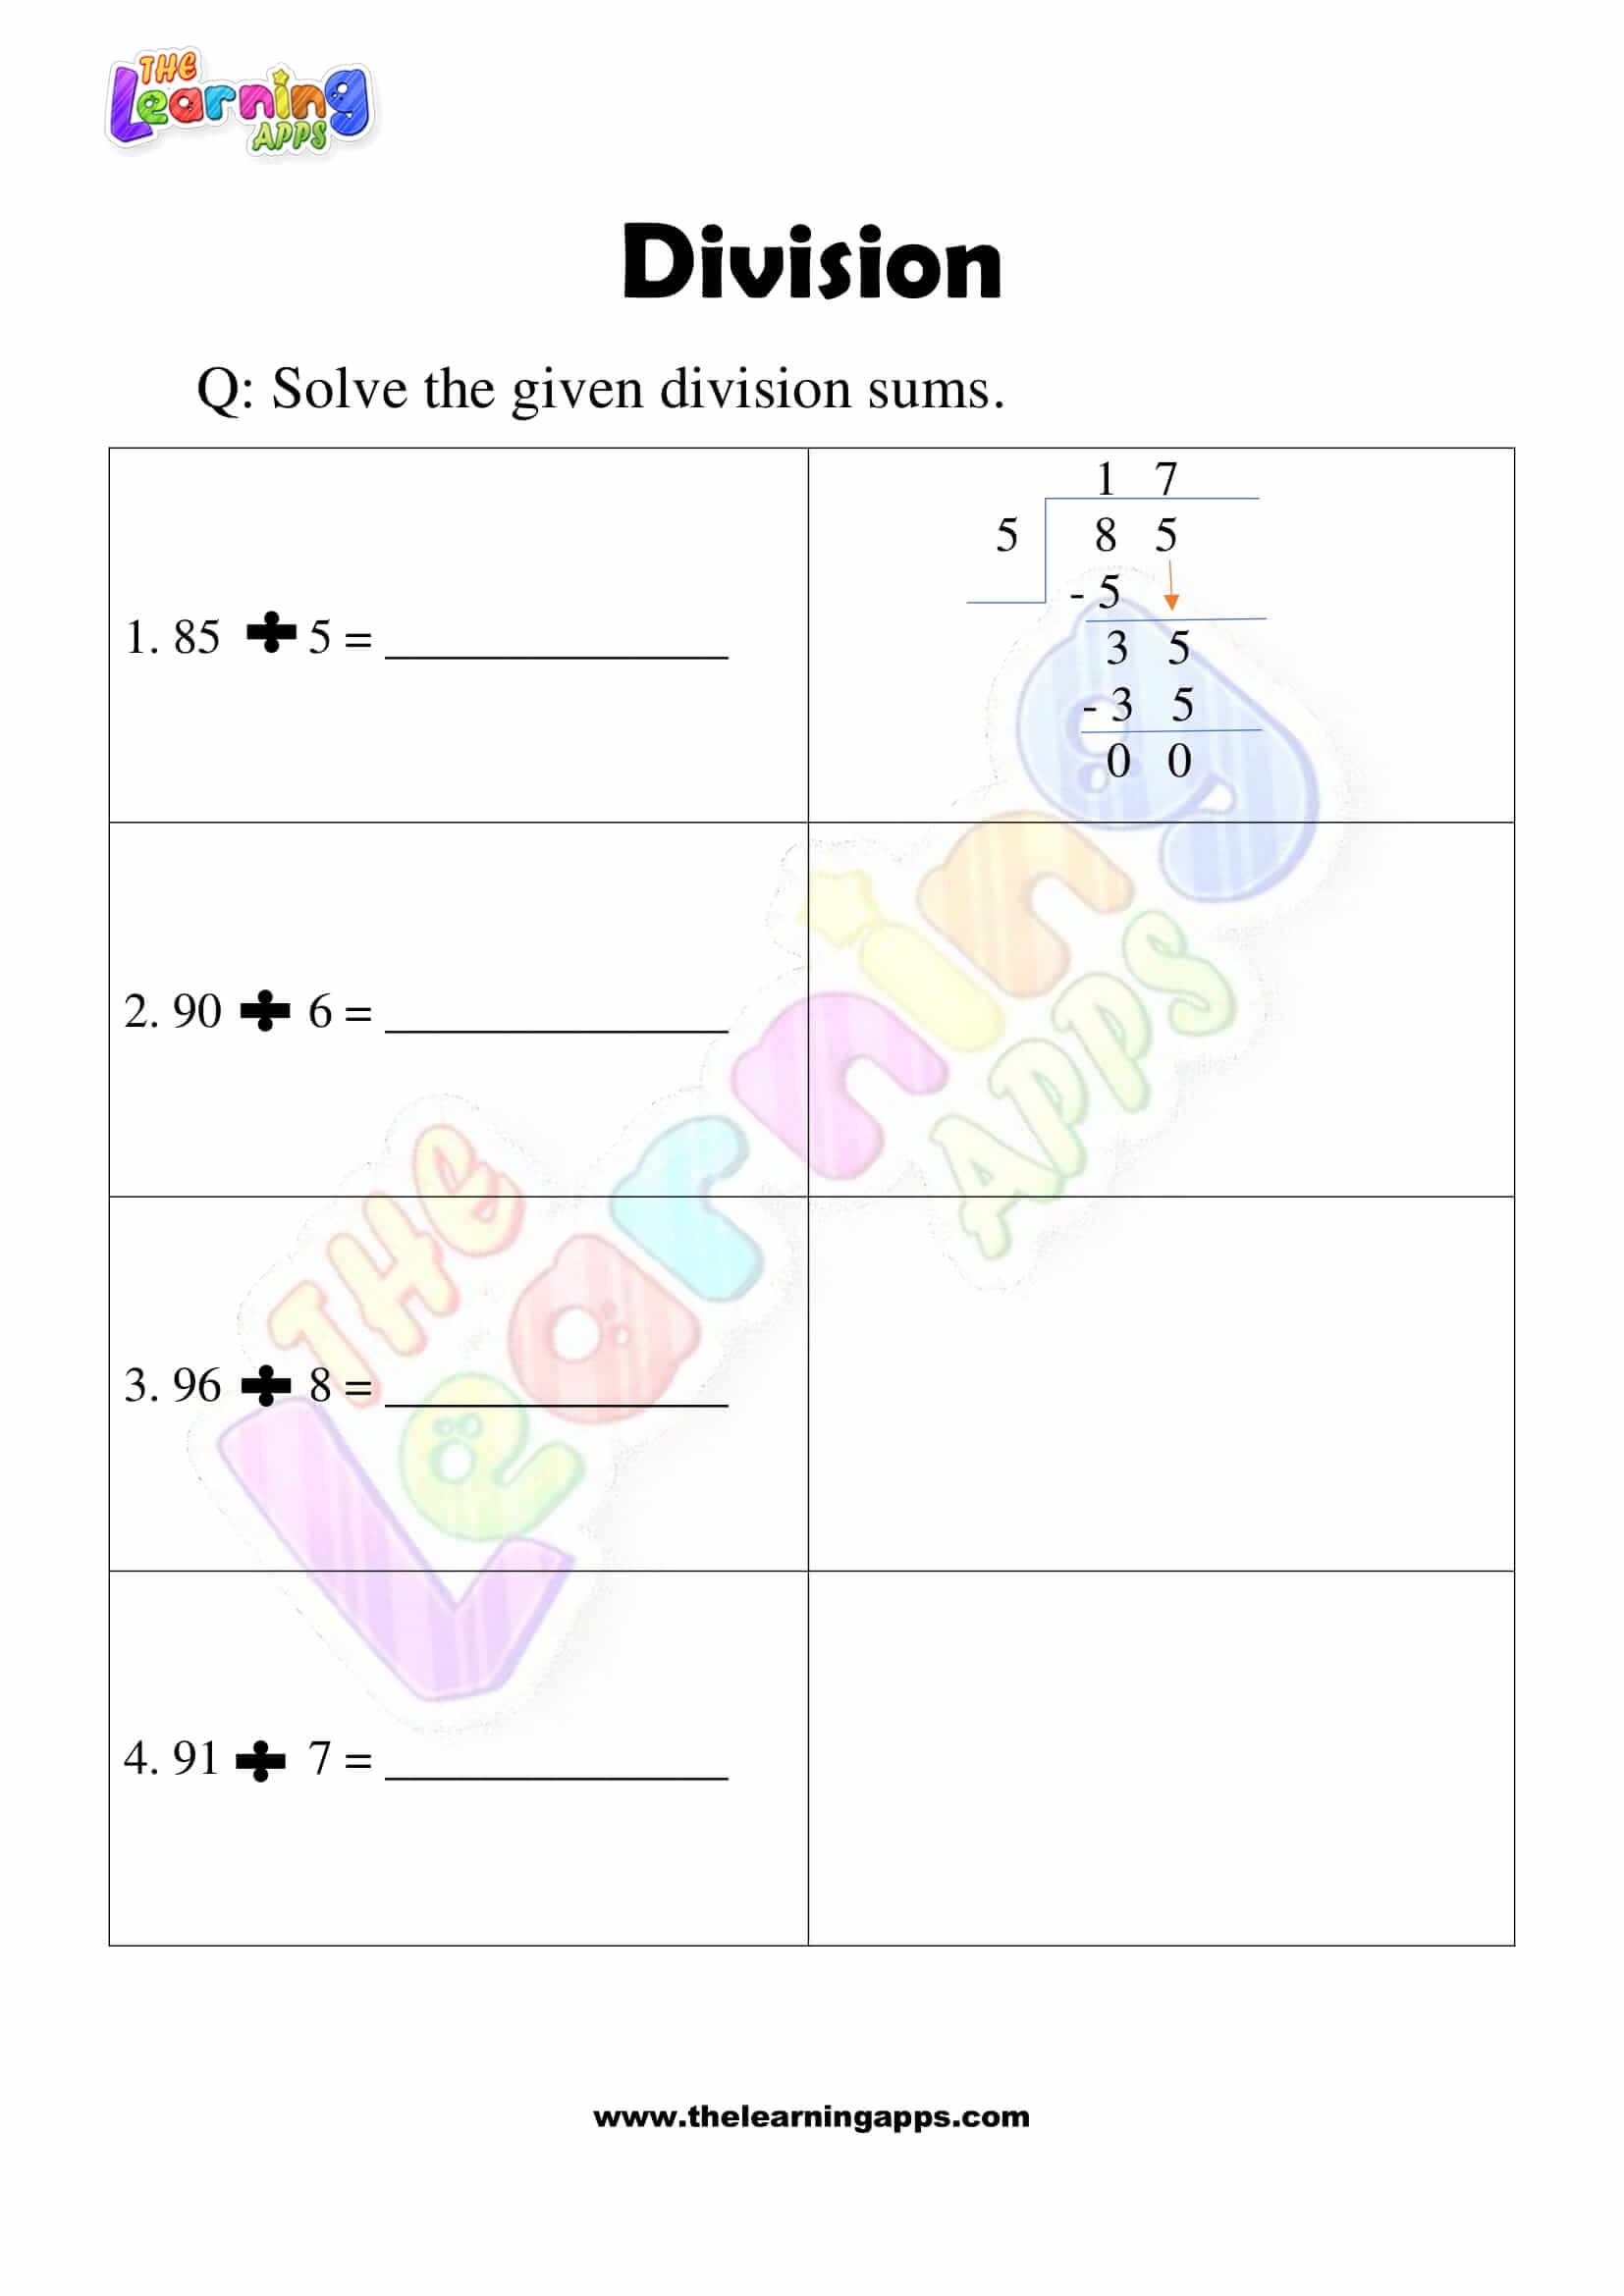 Division Worksheet - Grade 3 - Activity 4